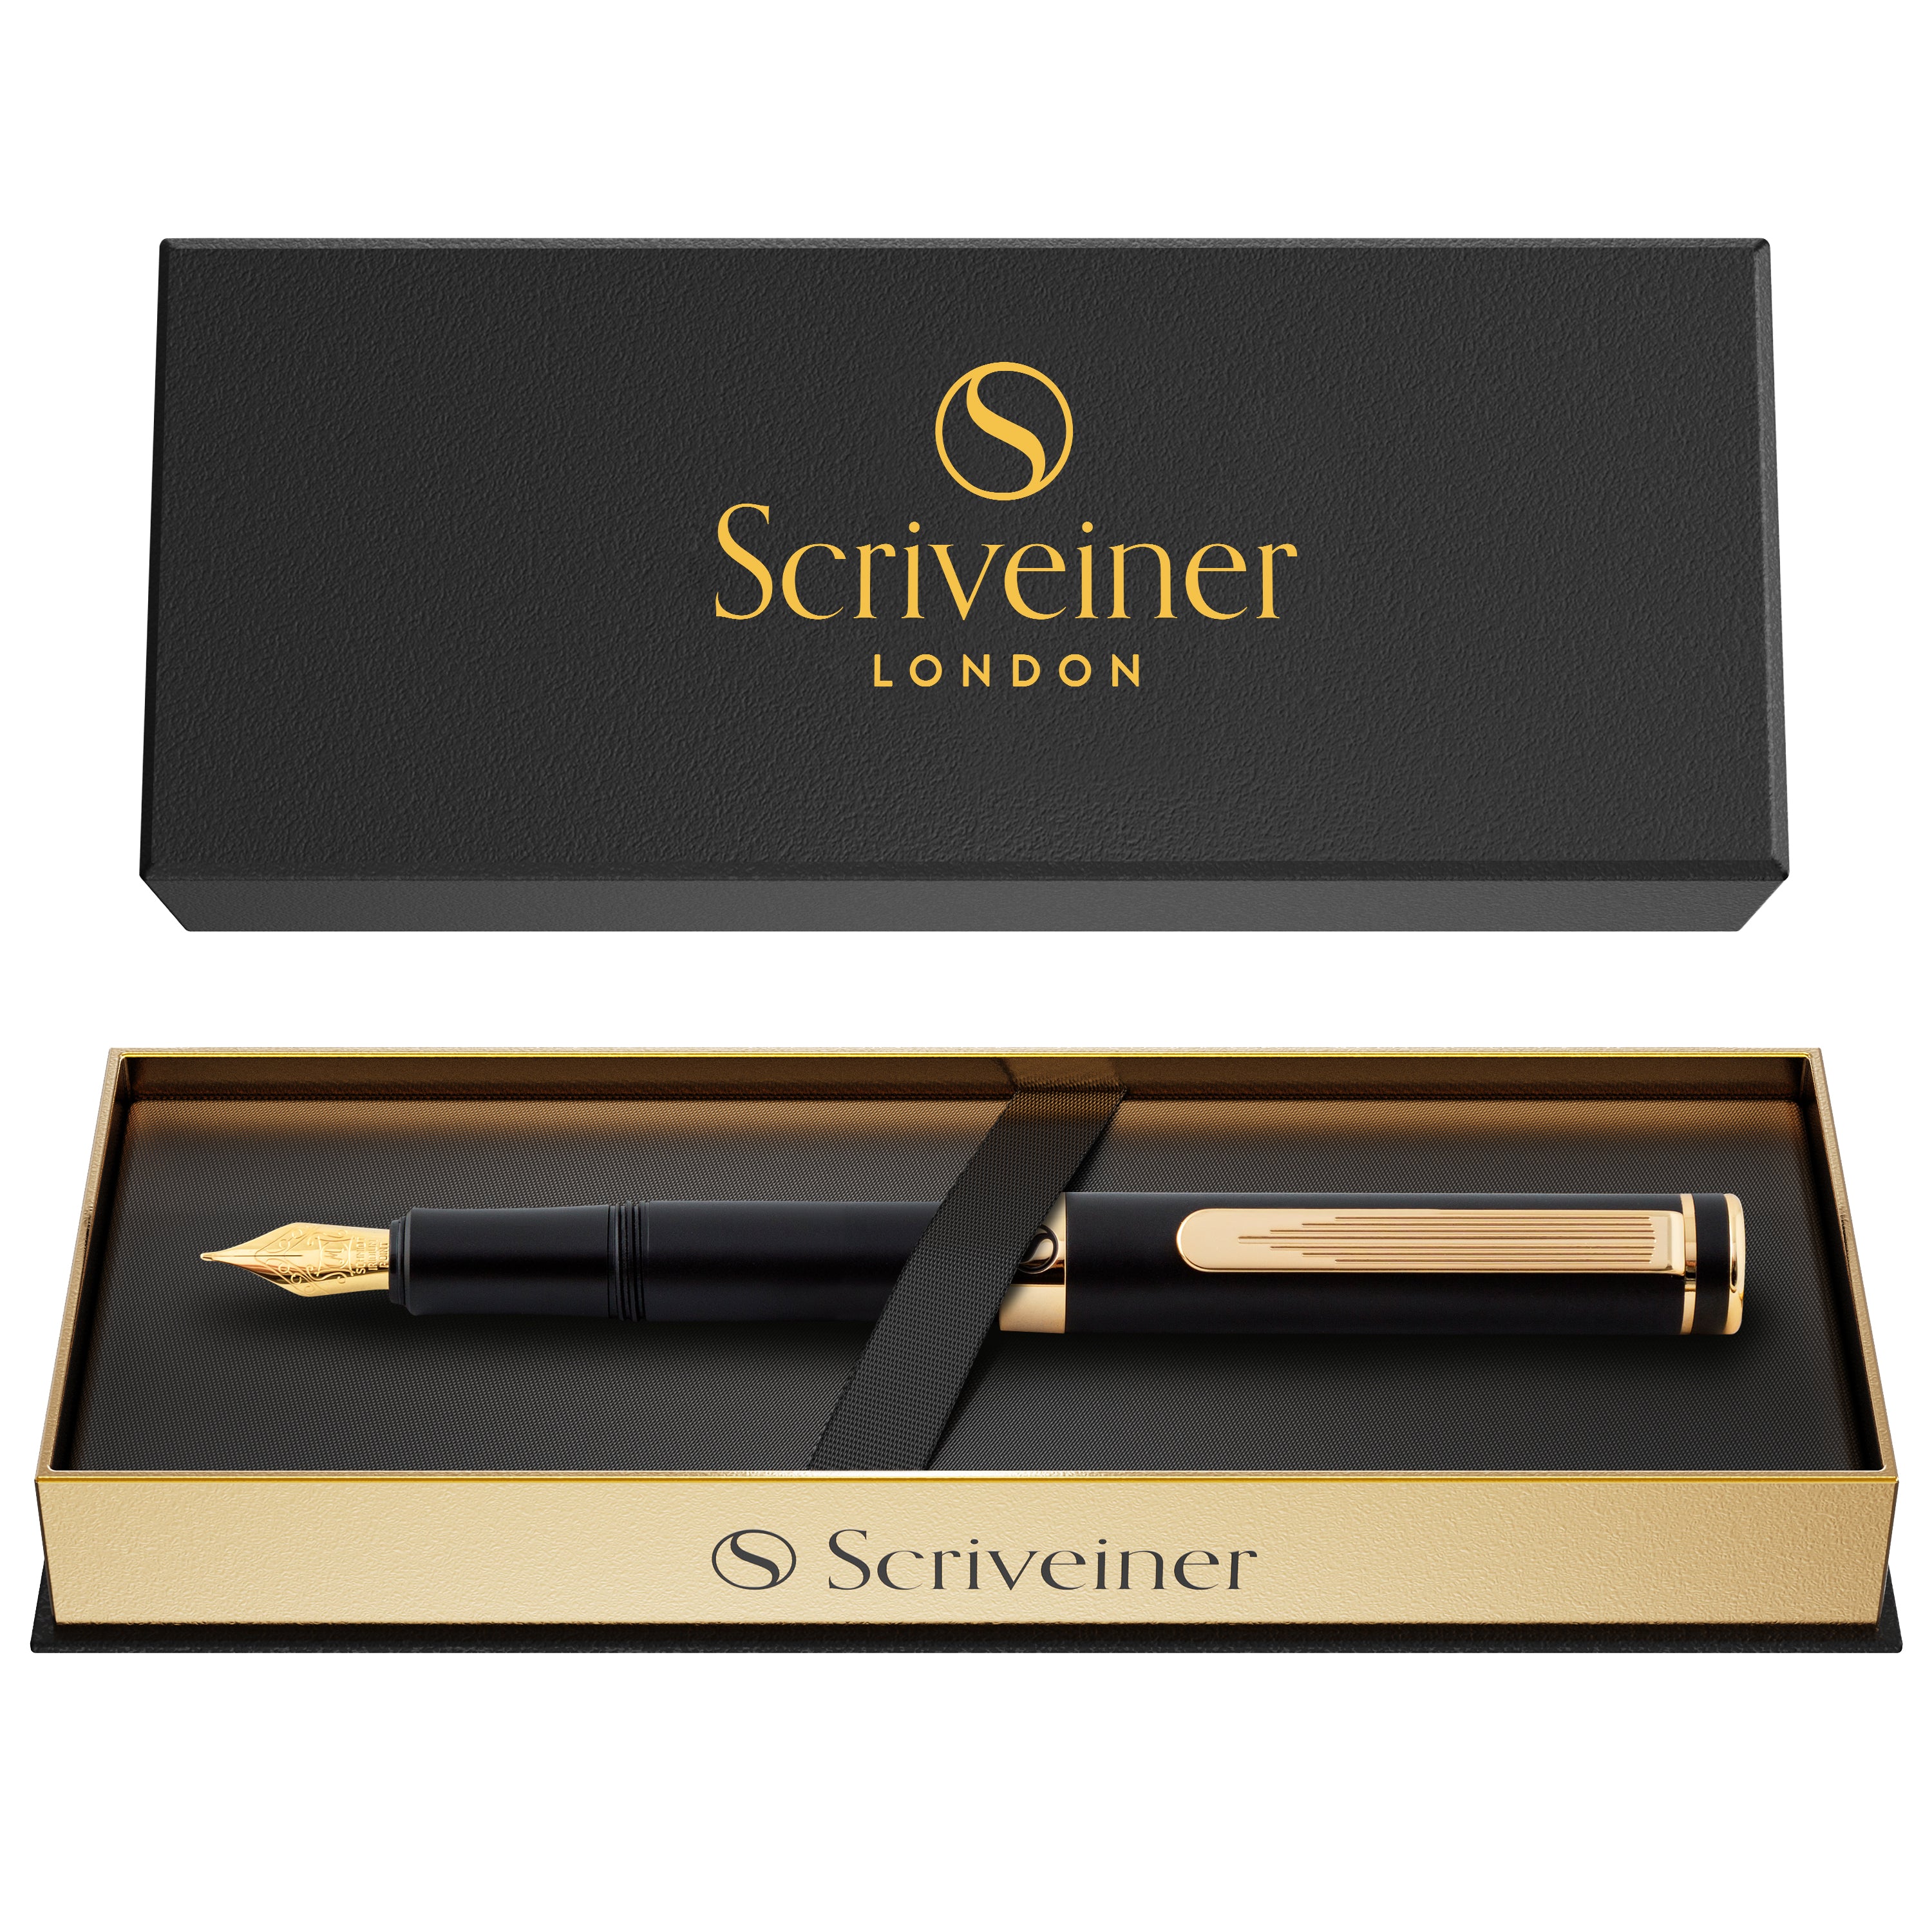 Scriveiner Luxury EDC Fountain Pen (Fine), Stunning Black Pocket Pen, 24K Gold Finish